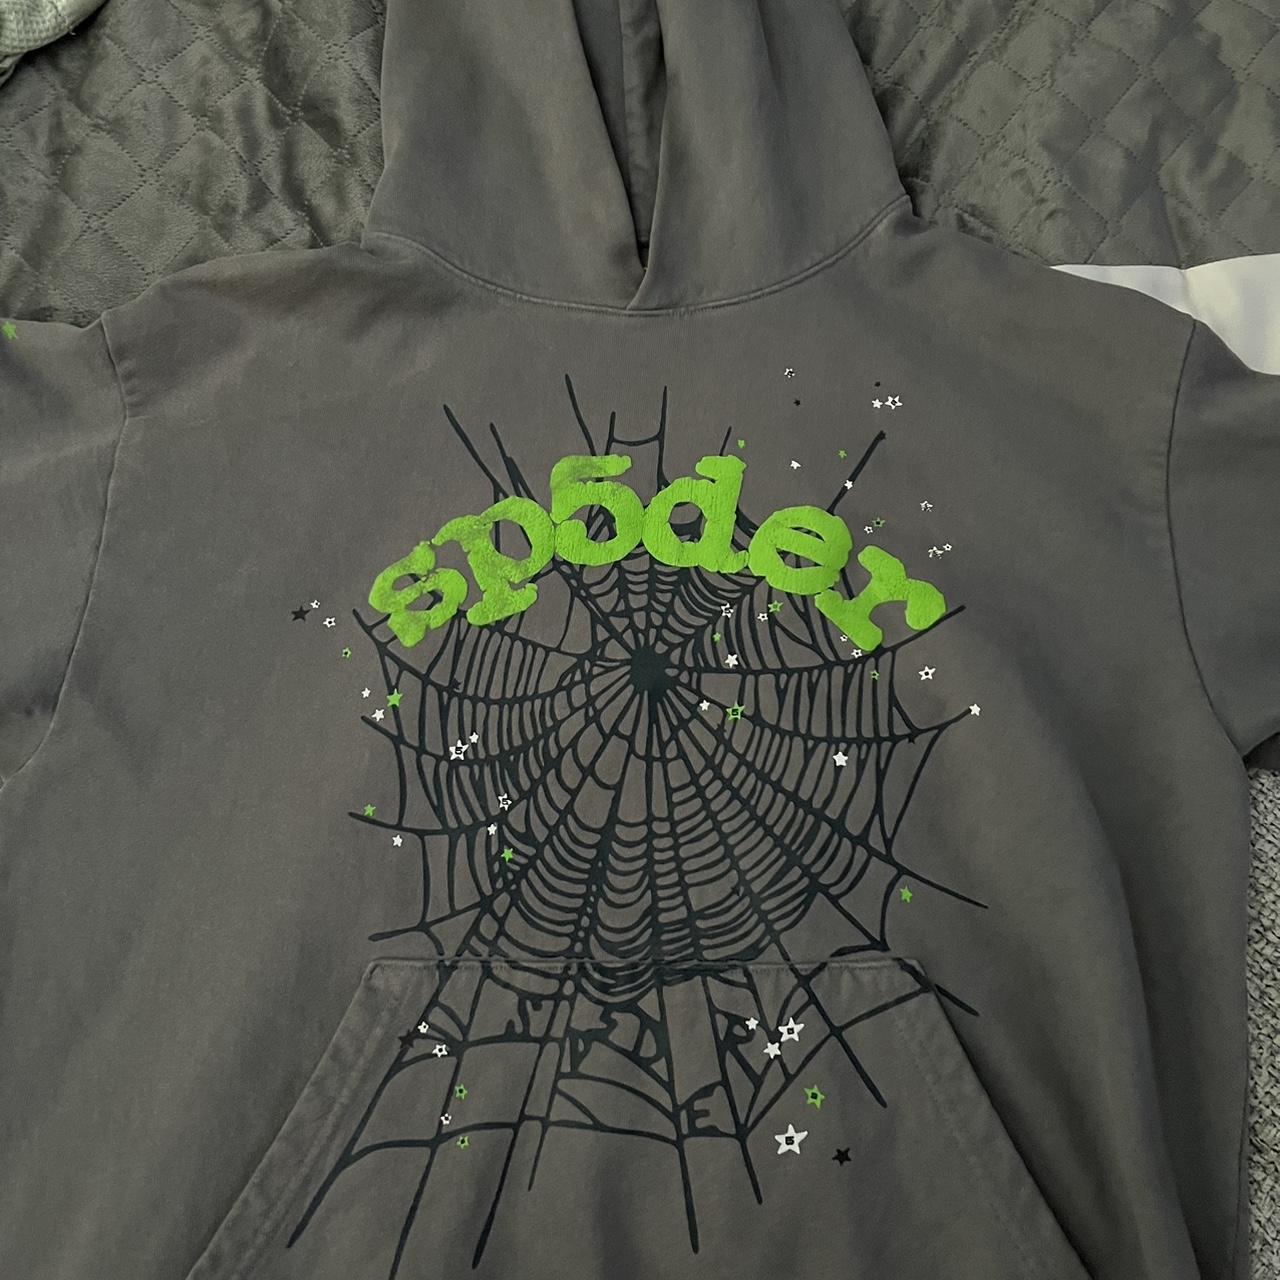 Sp5der worldwide hoodie grey n green few stains but... - Depop